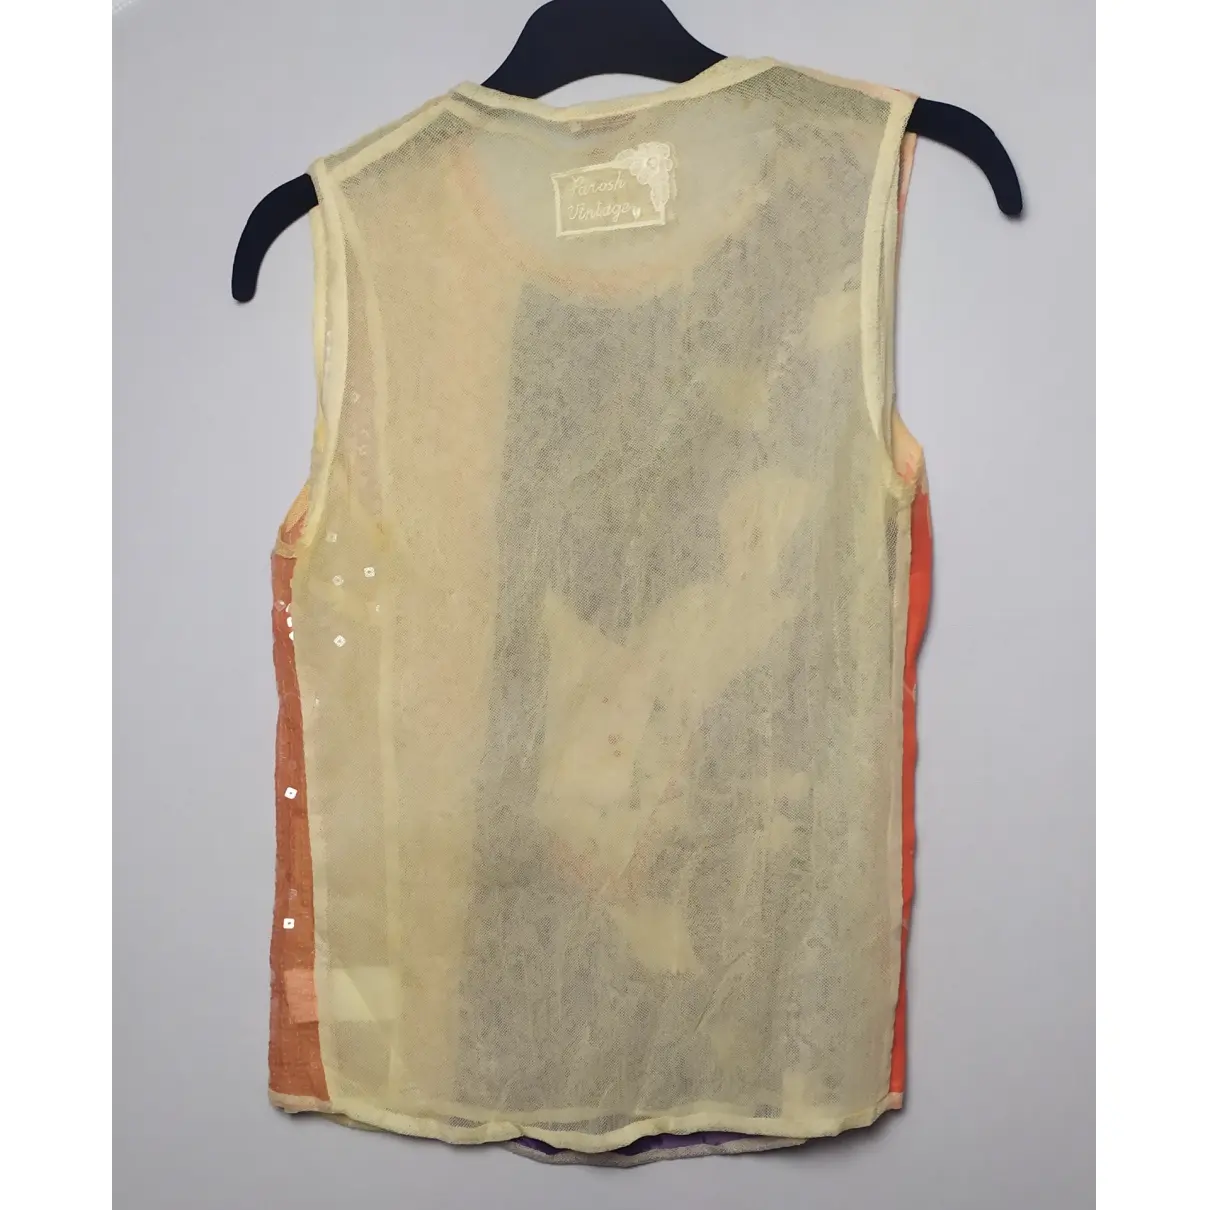 Buy Parosh Silk blouse online